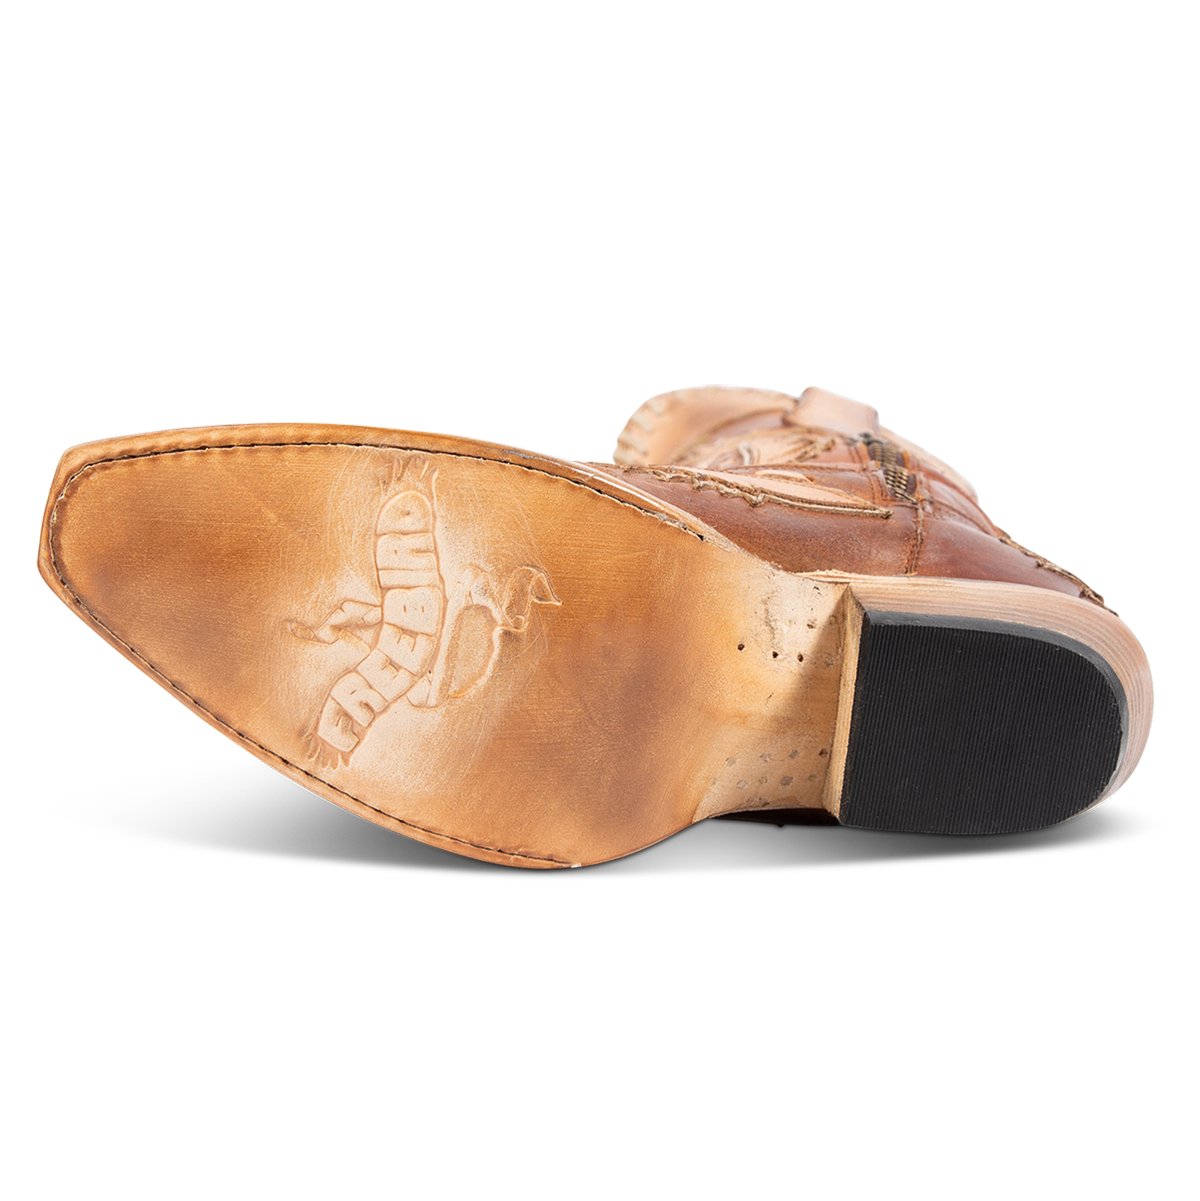 Leather sole imprinted with FREEBIRD on FREEBIRD women's Wayne cognac multi leather western mid-calf boot